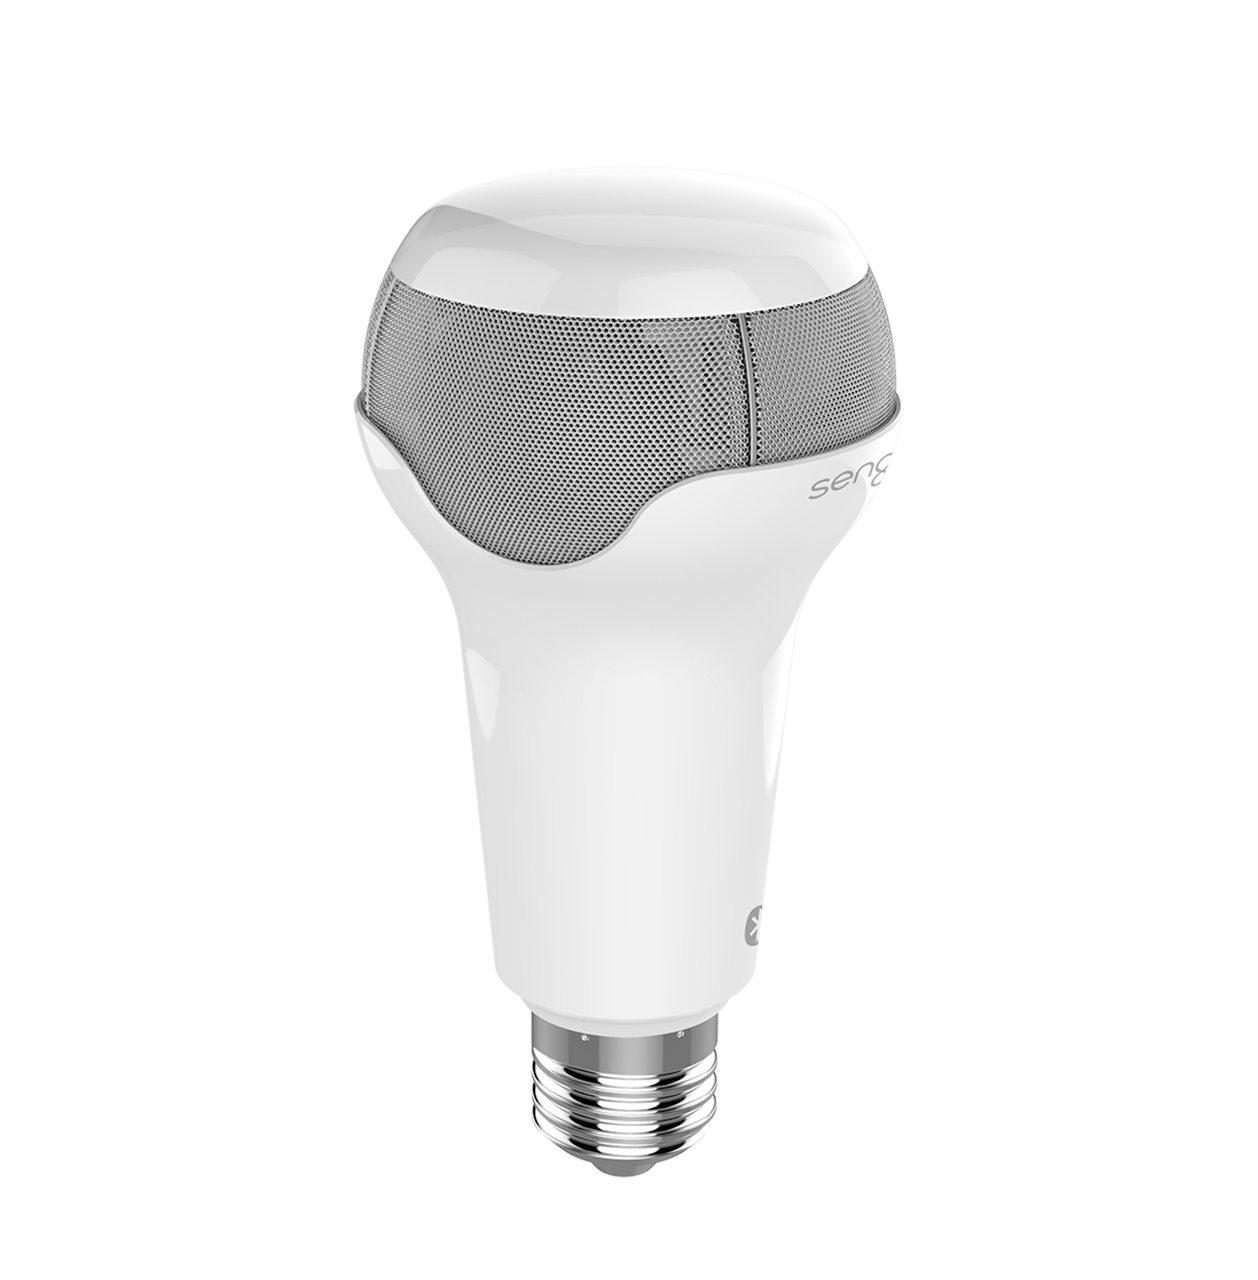 Smart лампочка с Wi-Fi репитером — удобная технология для умного дома или офиса - 4